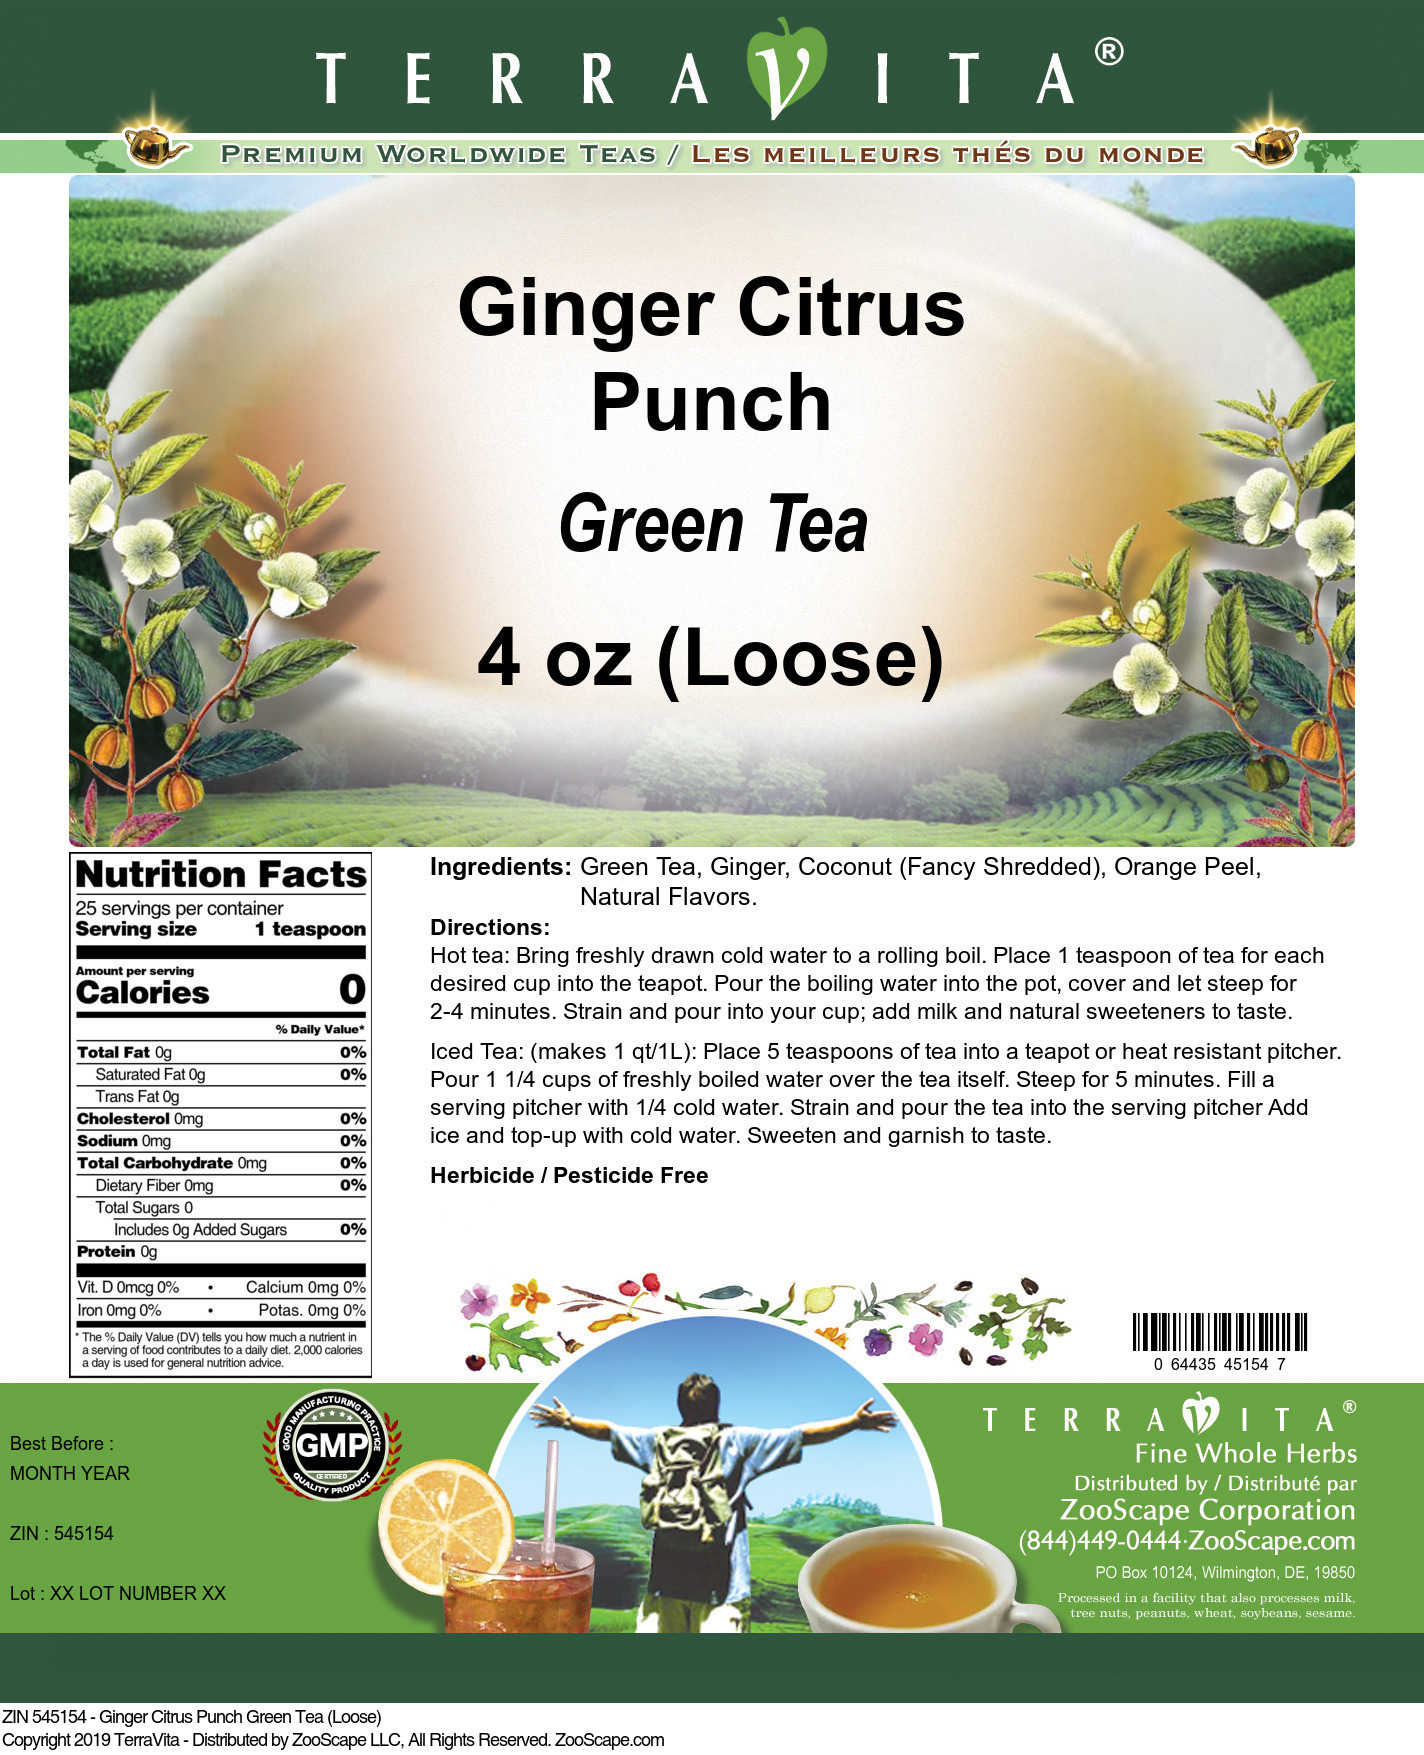 Ginger Citrus Punch Green Tea (Loose) - Label